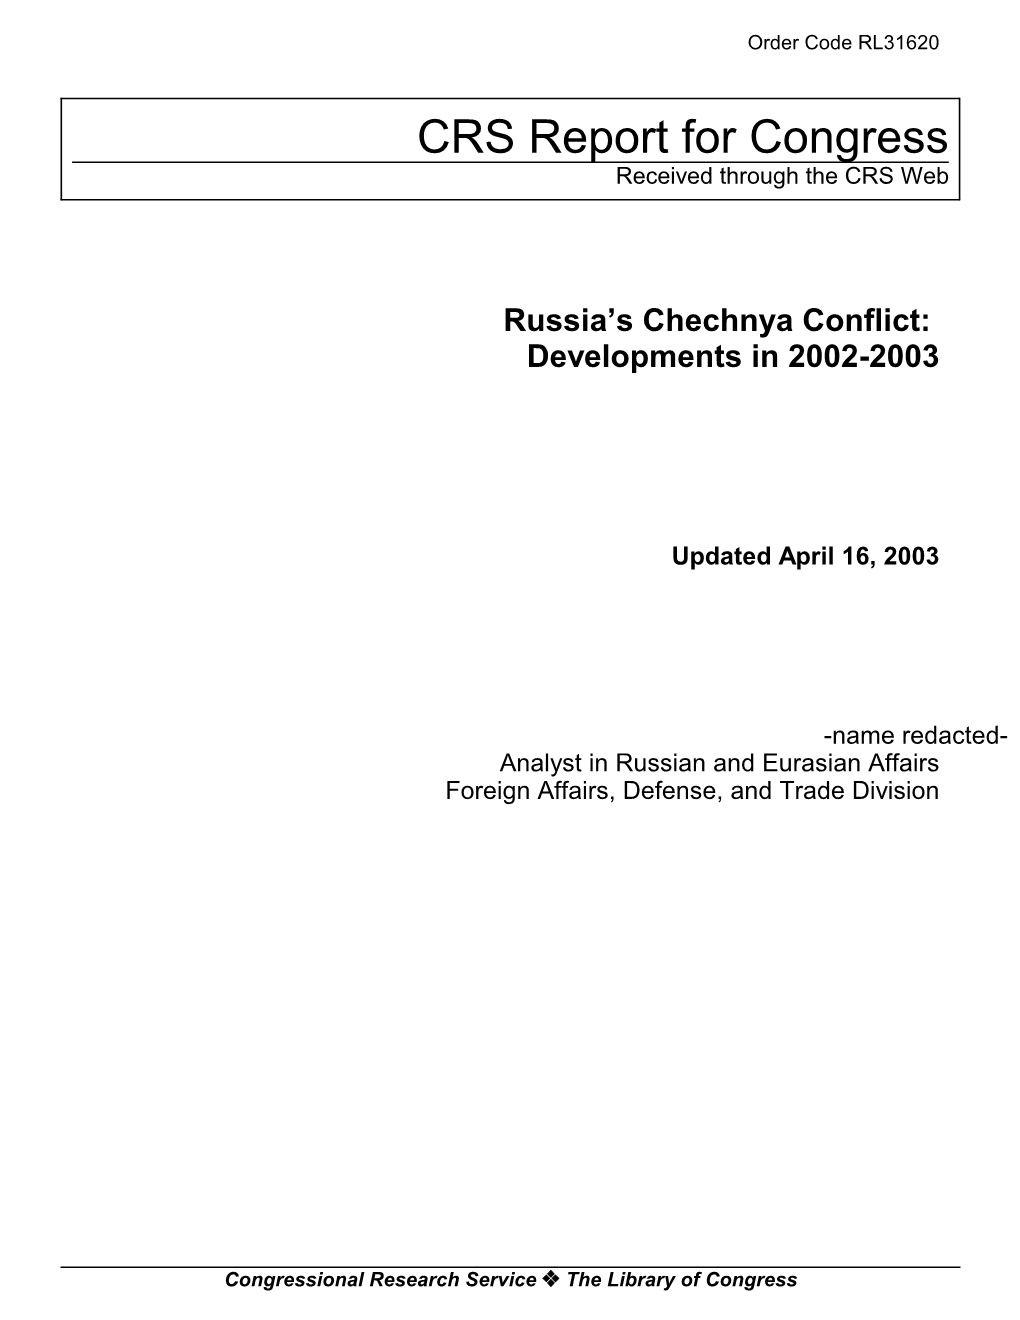 Russia's Chechnya Conflict: Developments in 2002-2003